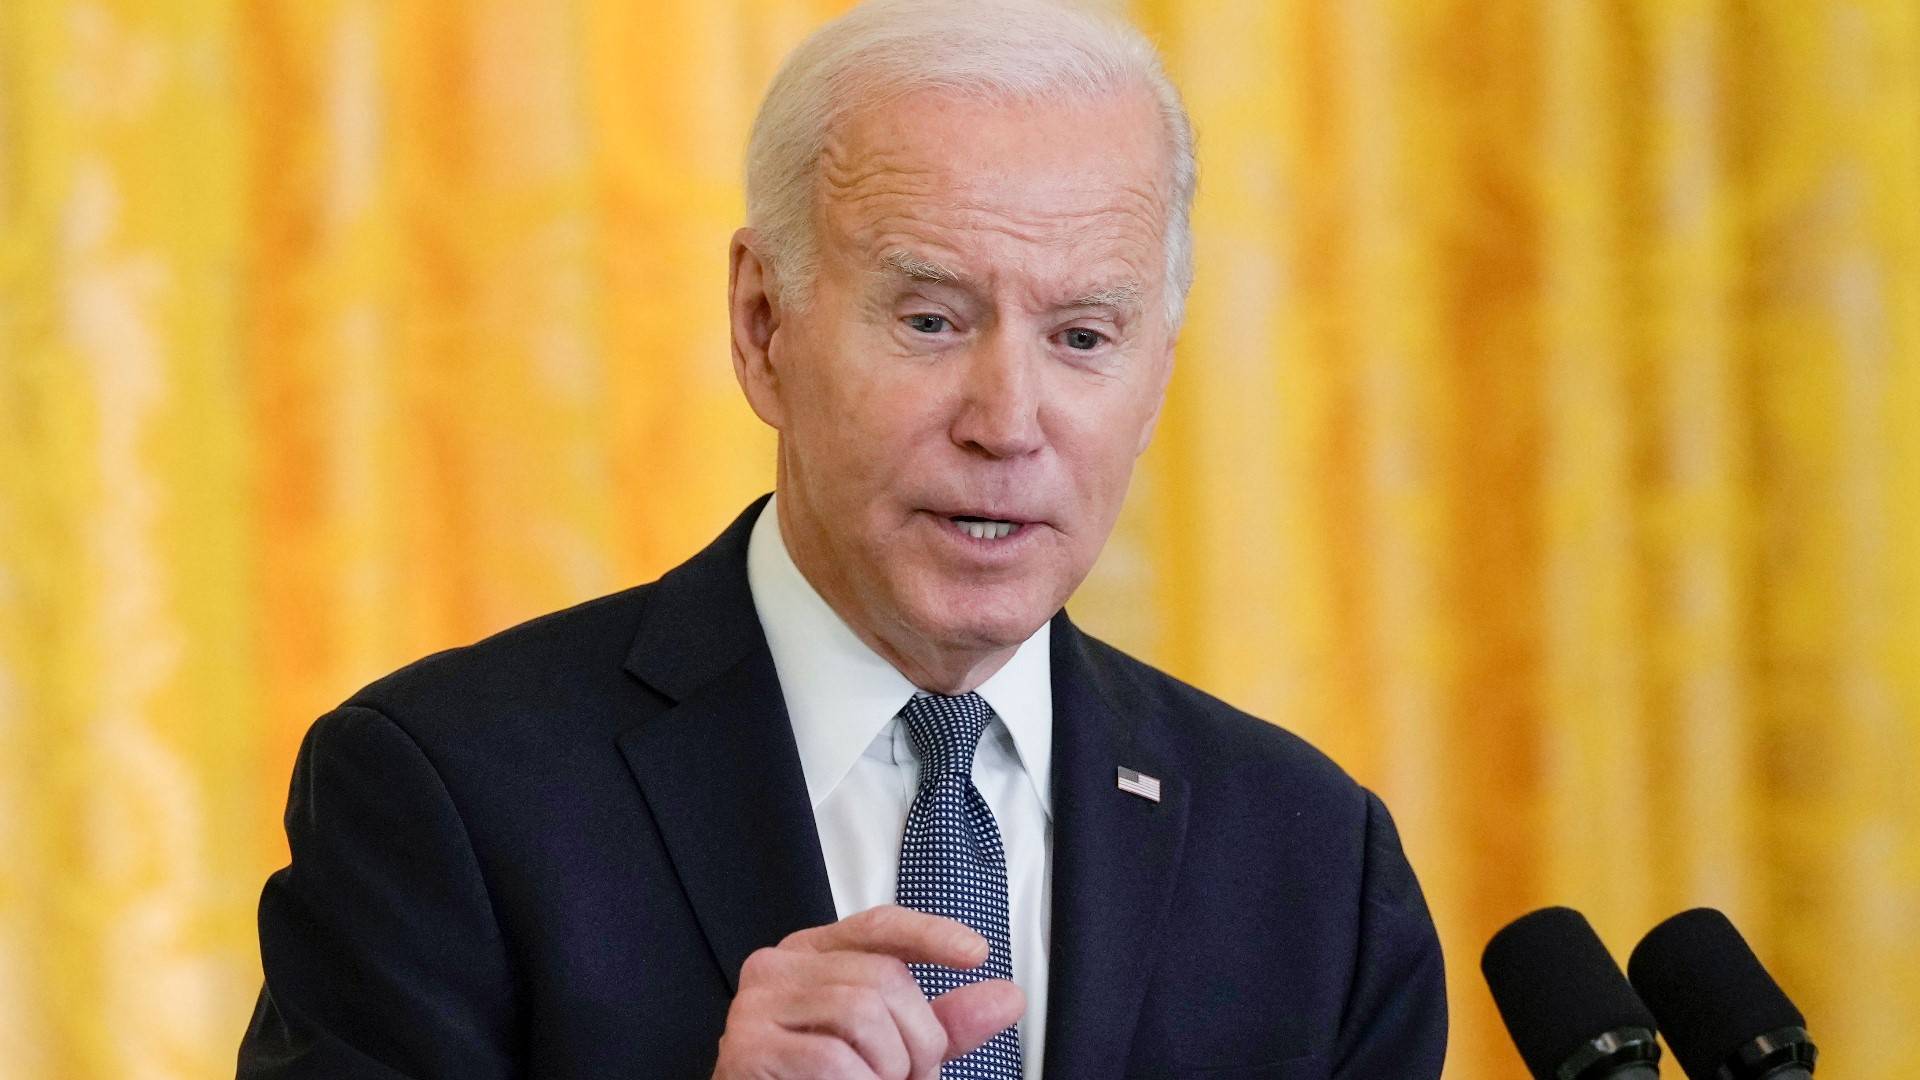 The White House announced that President Joe Biden will be visiting South Carolina this Thursday.